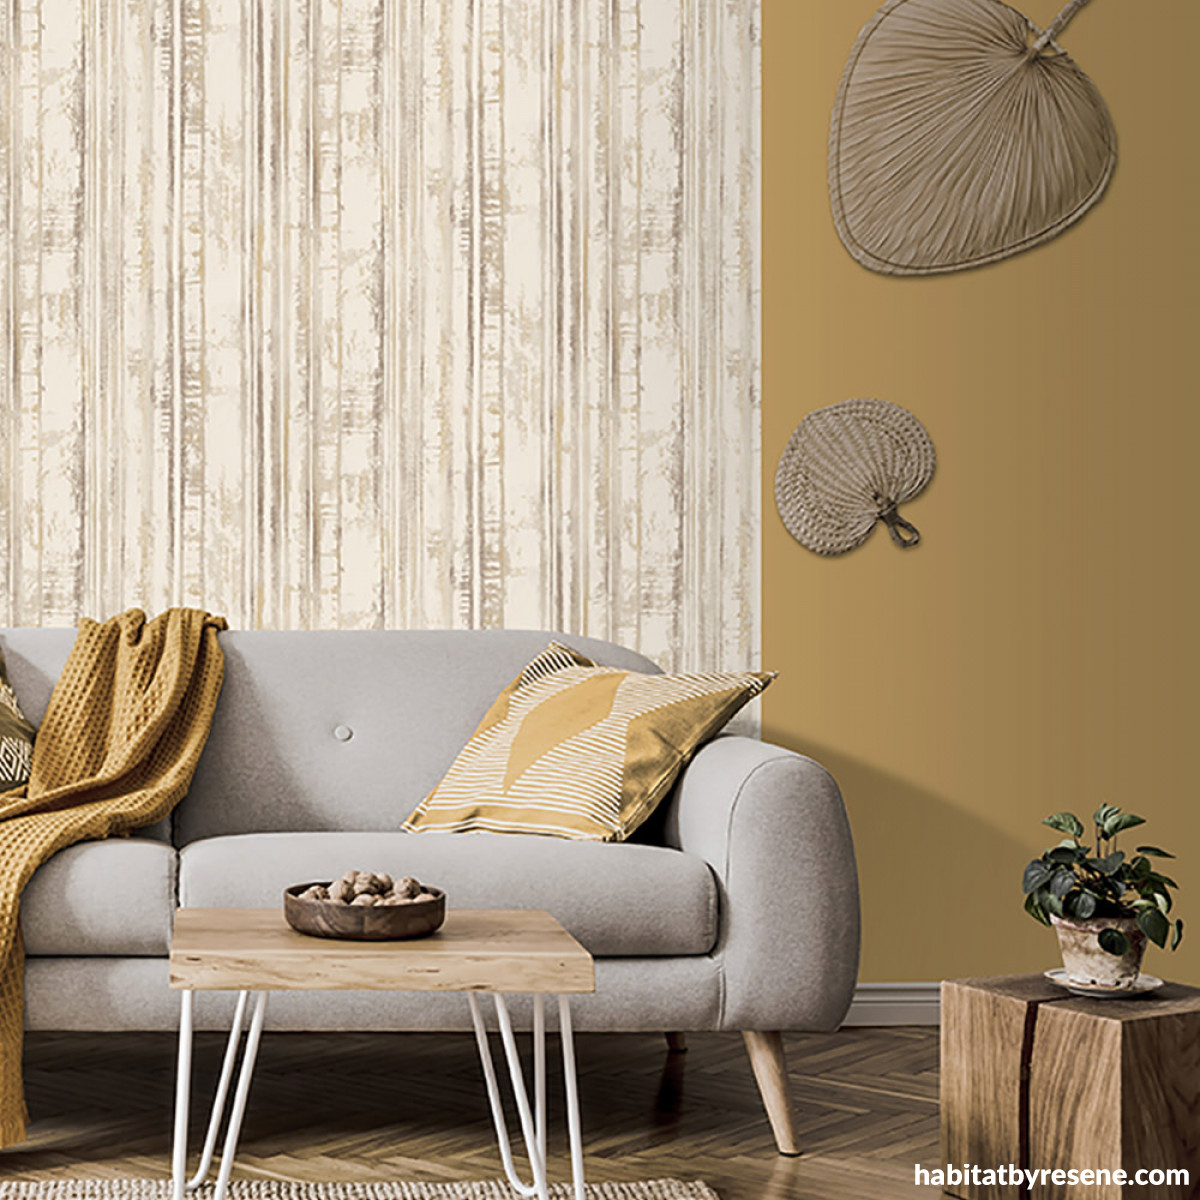 5 ways to embrace wallpaper for winter wellness | Habitat by Resene